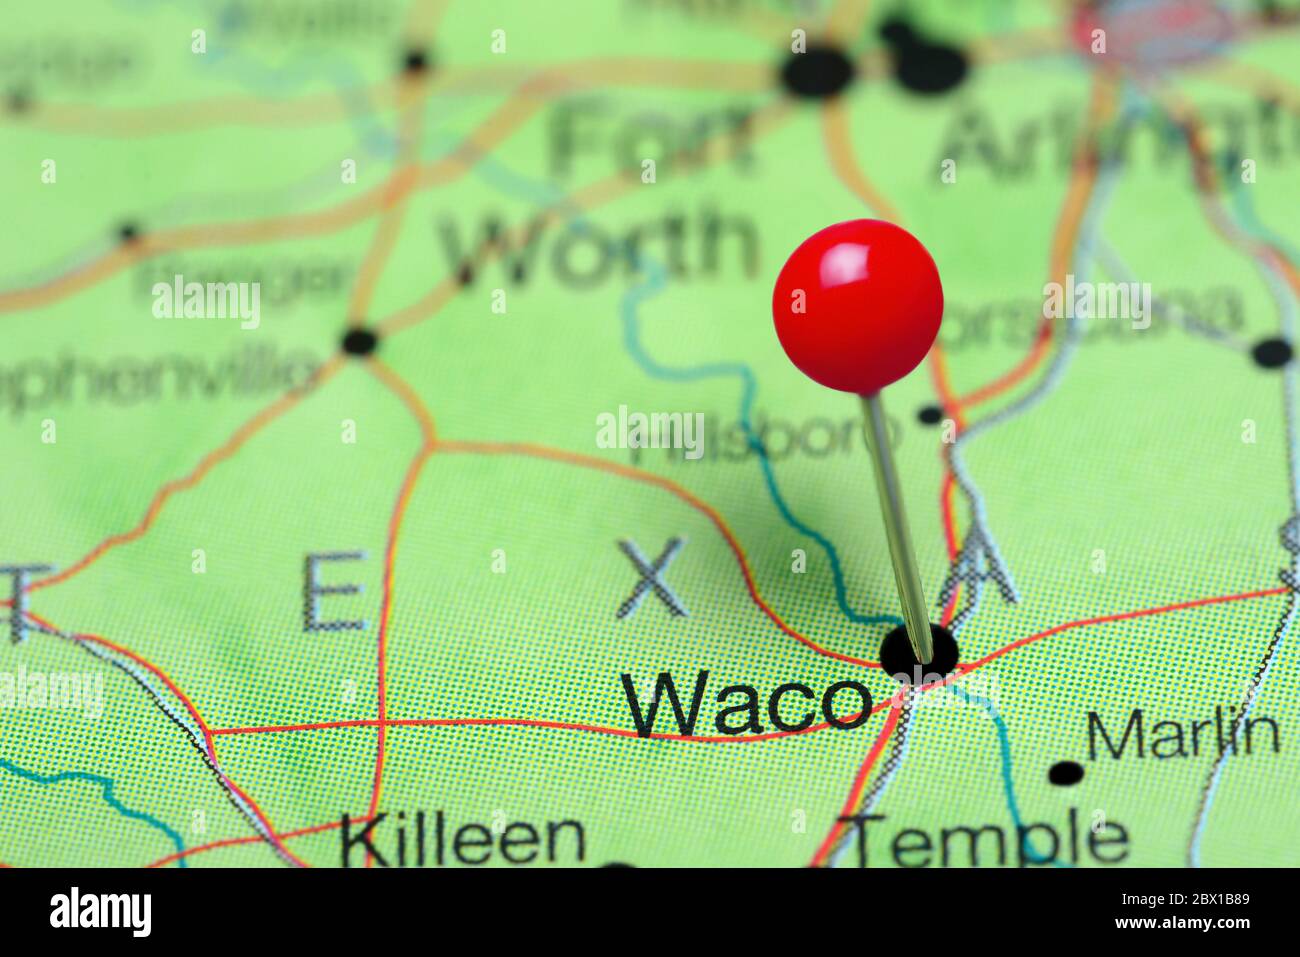 Waco pinned on a map of Texas, USA Stock Photo